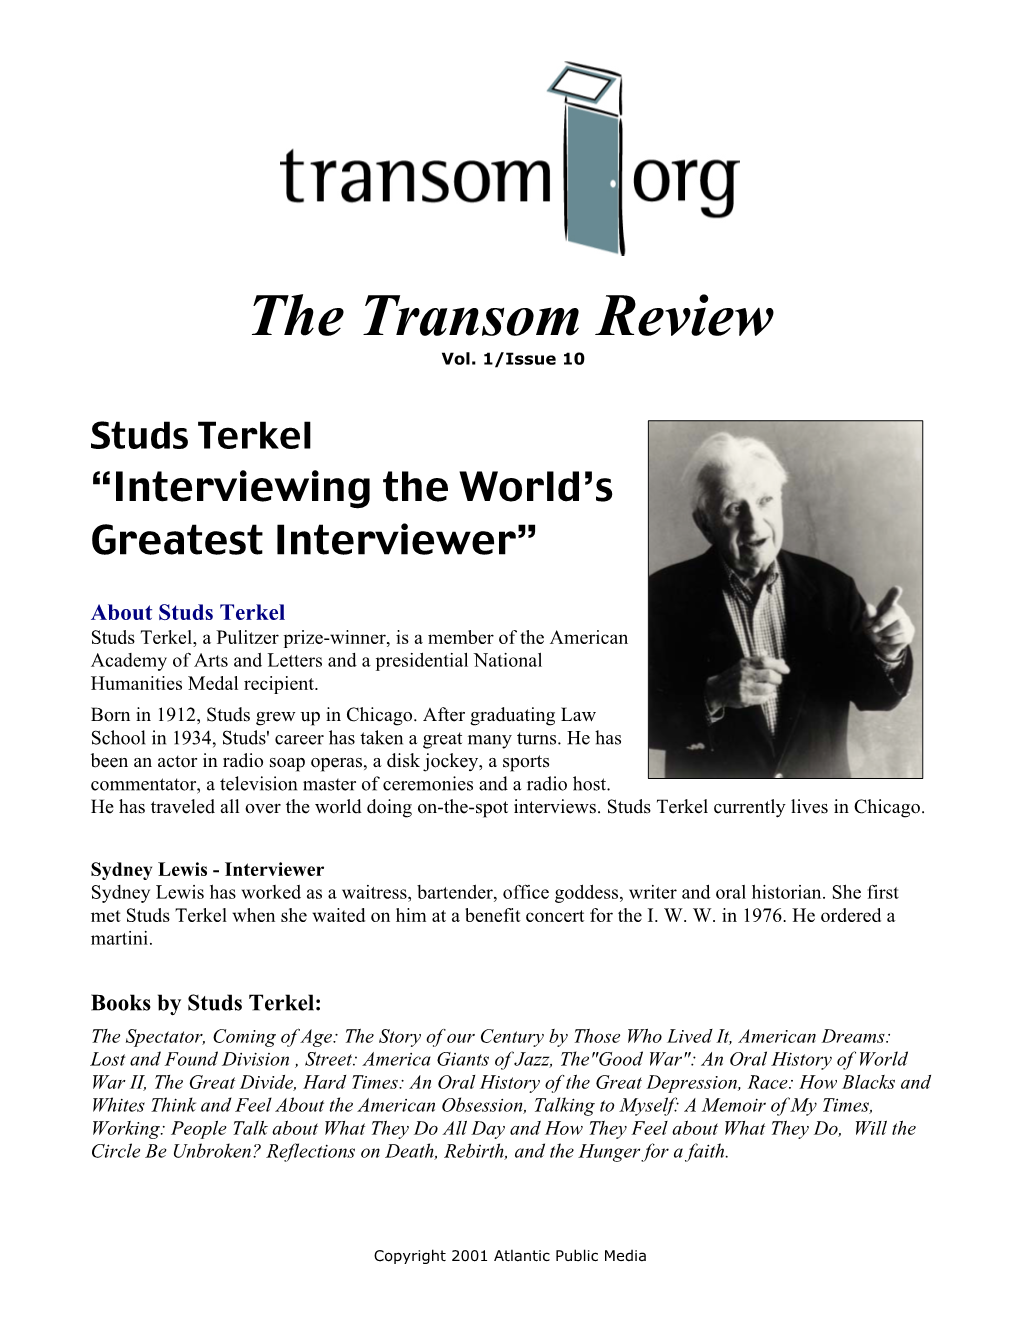 Studs Terkel's Topic